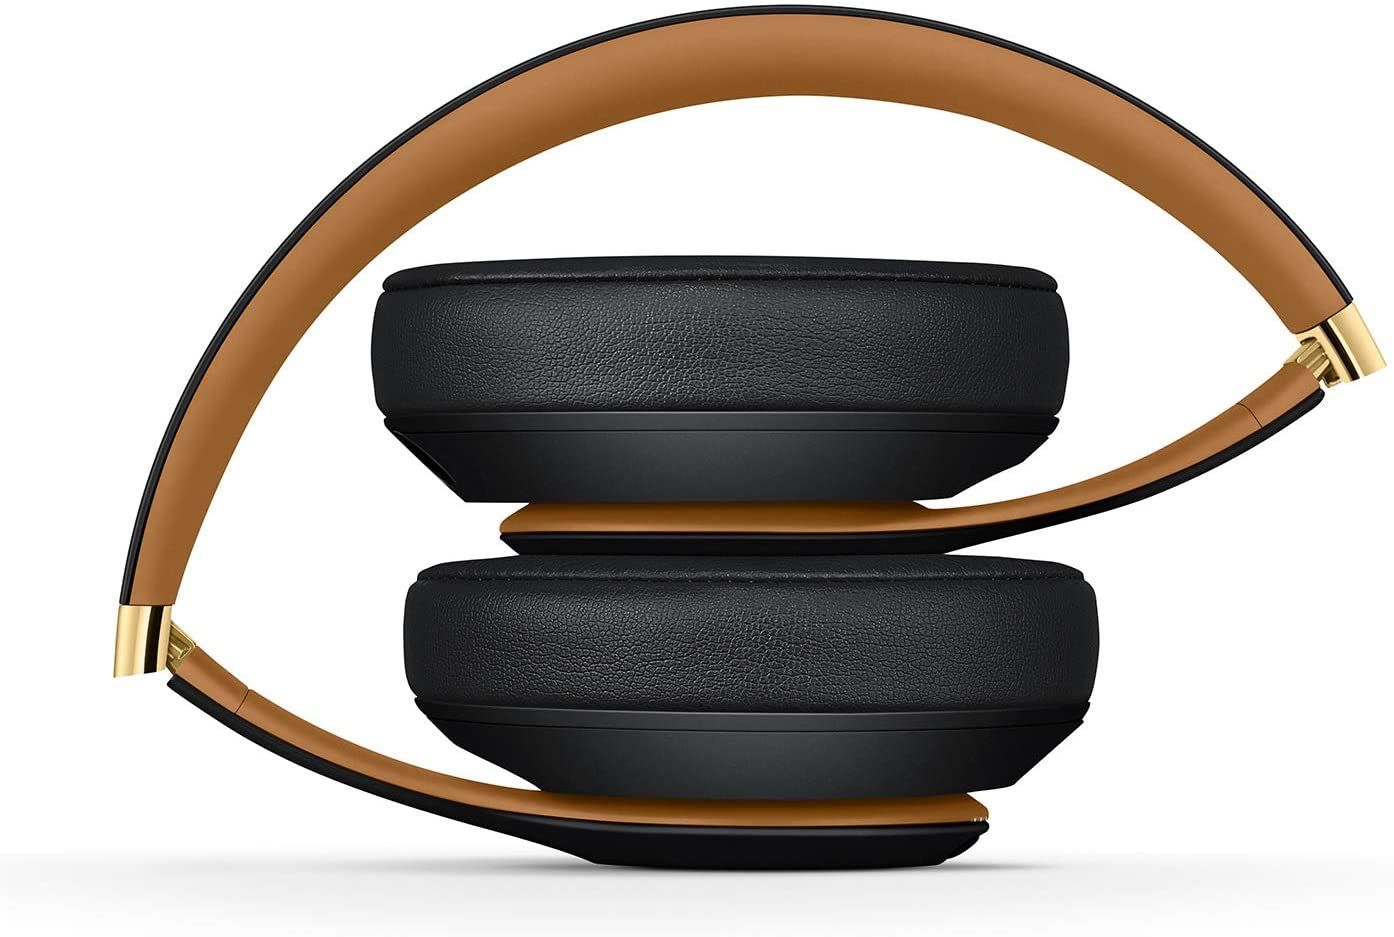 Beats Studio3 Wireless Noise Cancelling Over-Ear Headphones folded